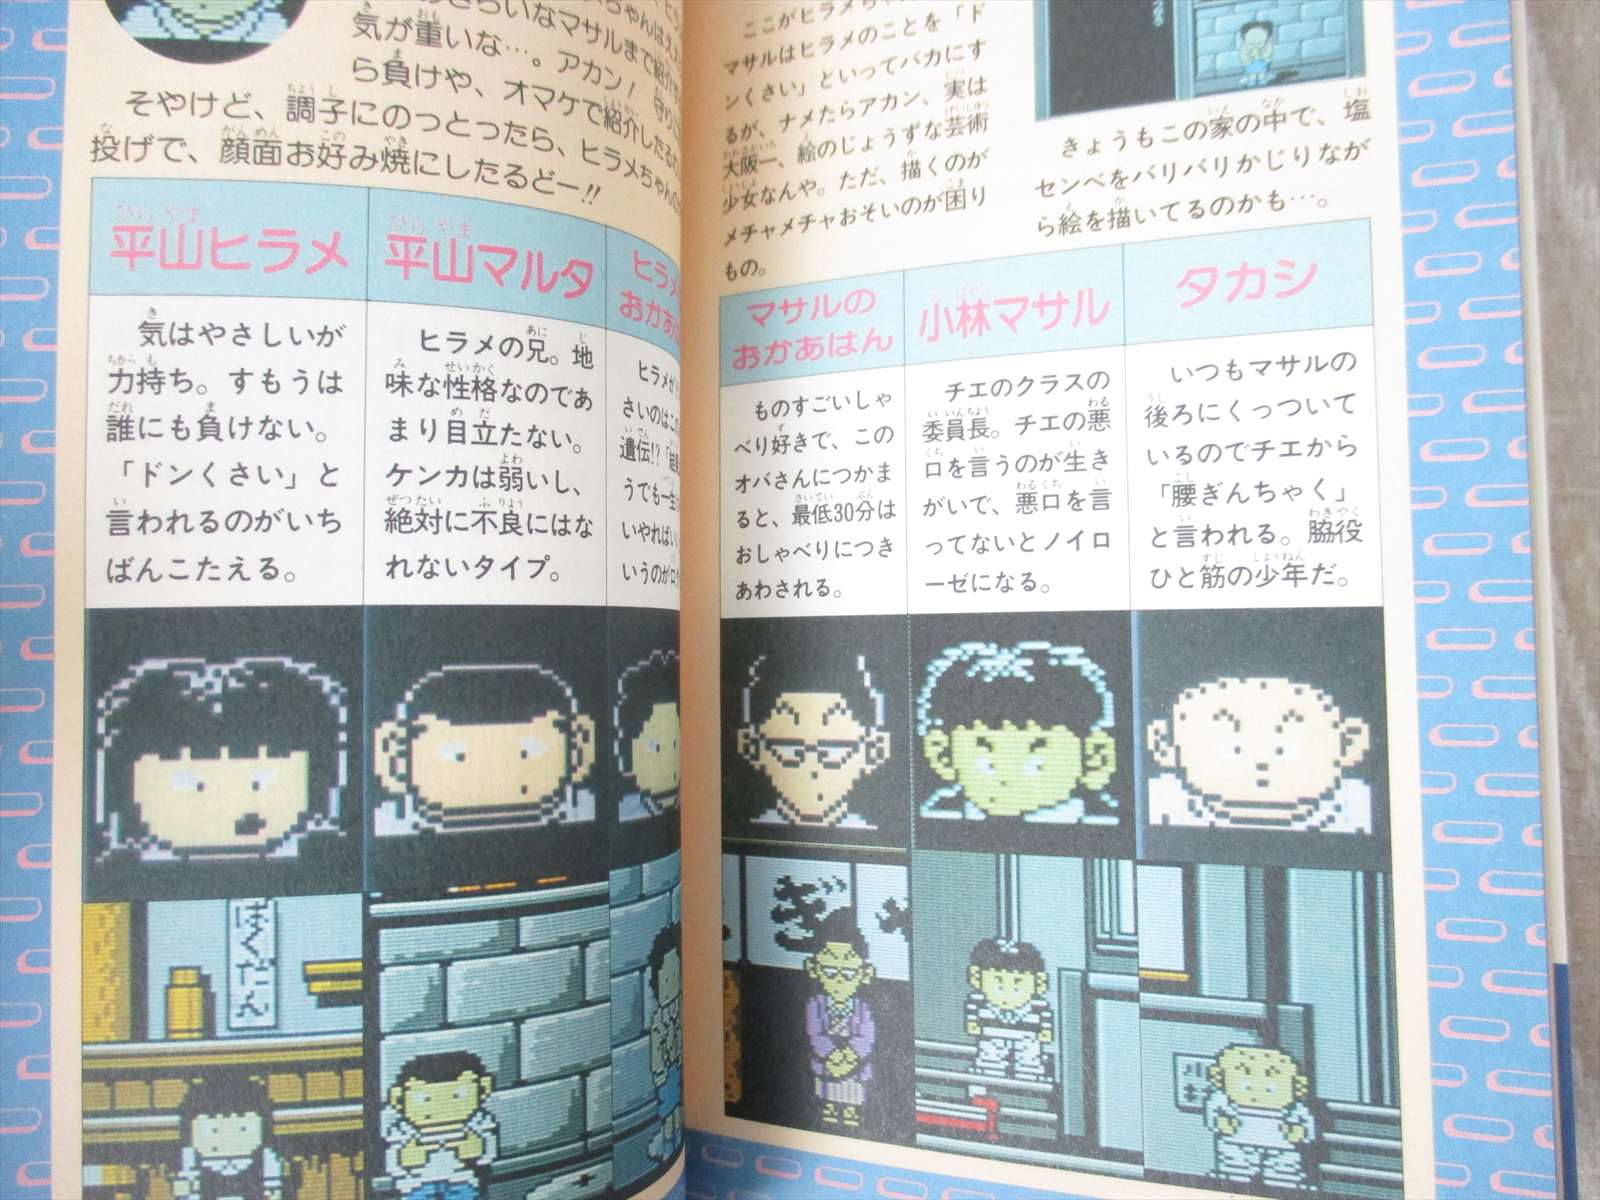 Jarinko Chie Hisshouhou Manual Guide Nintendo Famicom 19 Book Km04 Ebay